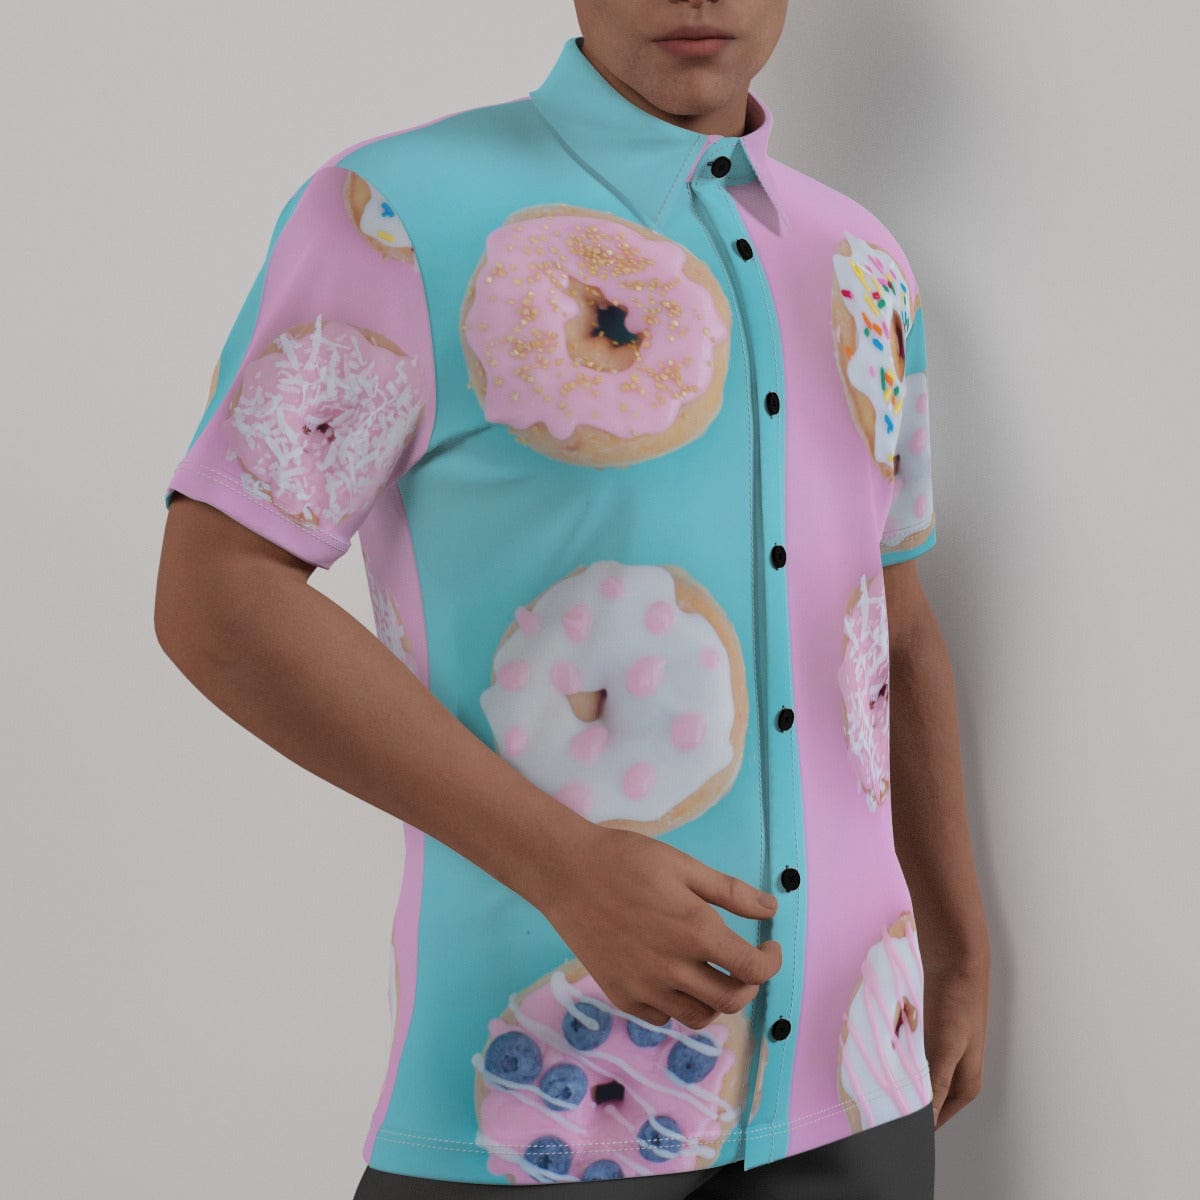 Yoycol Donut Lover's Men's Shirt